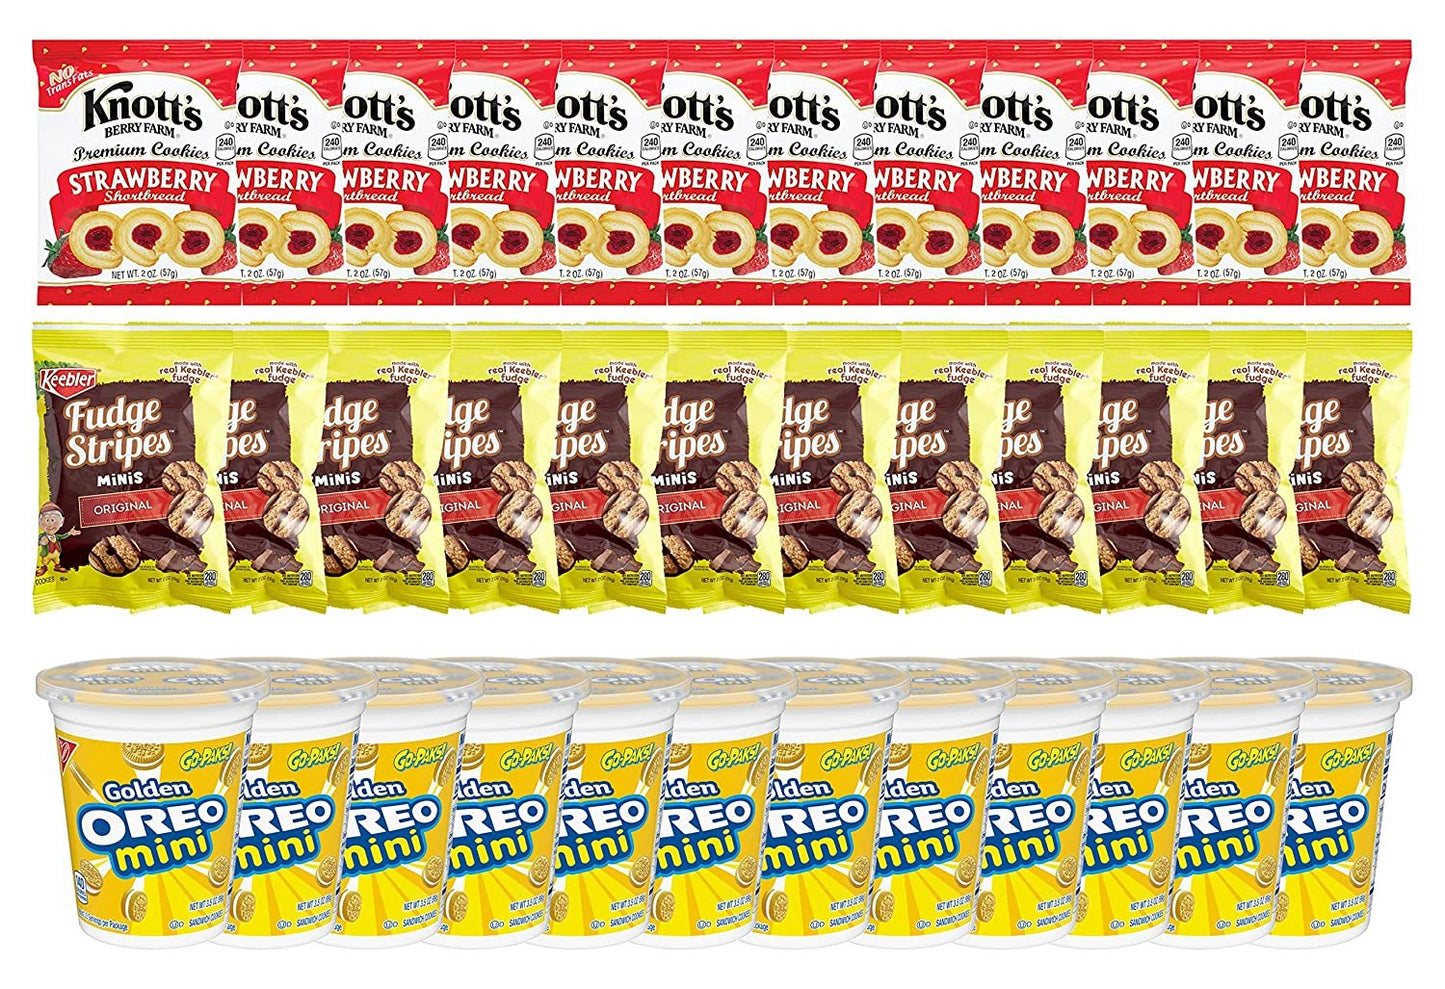 Knott's, Keebler Fudge Strips, Golden Oreo Mini Cookies Variety Pack - 36 count